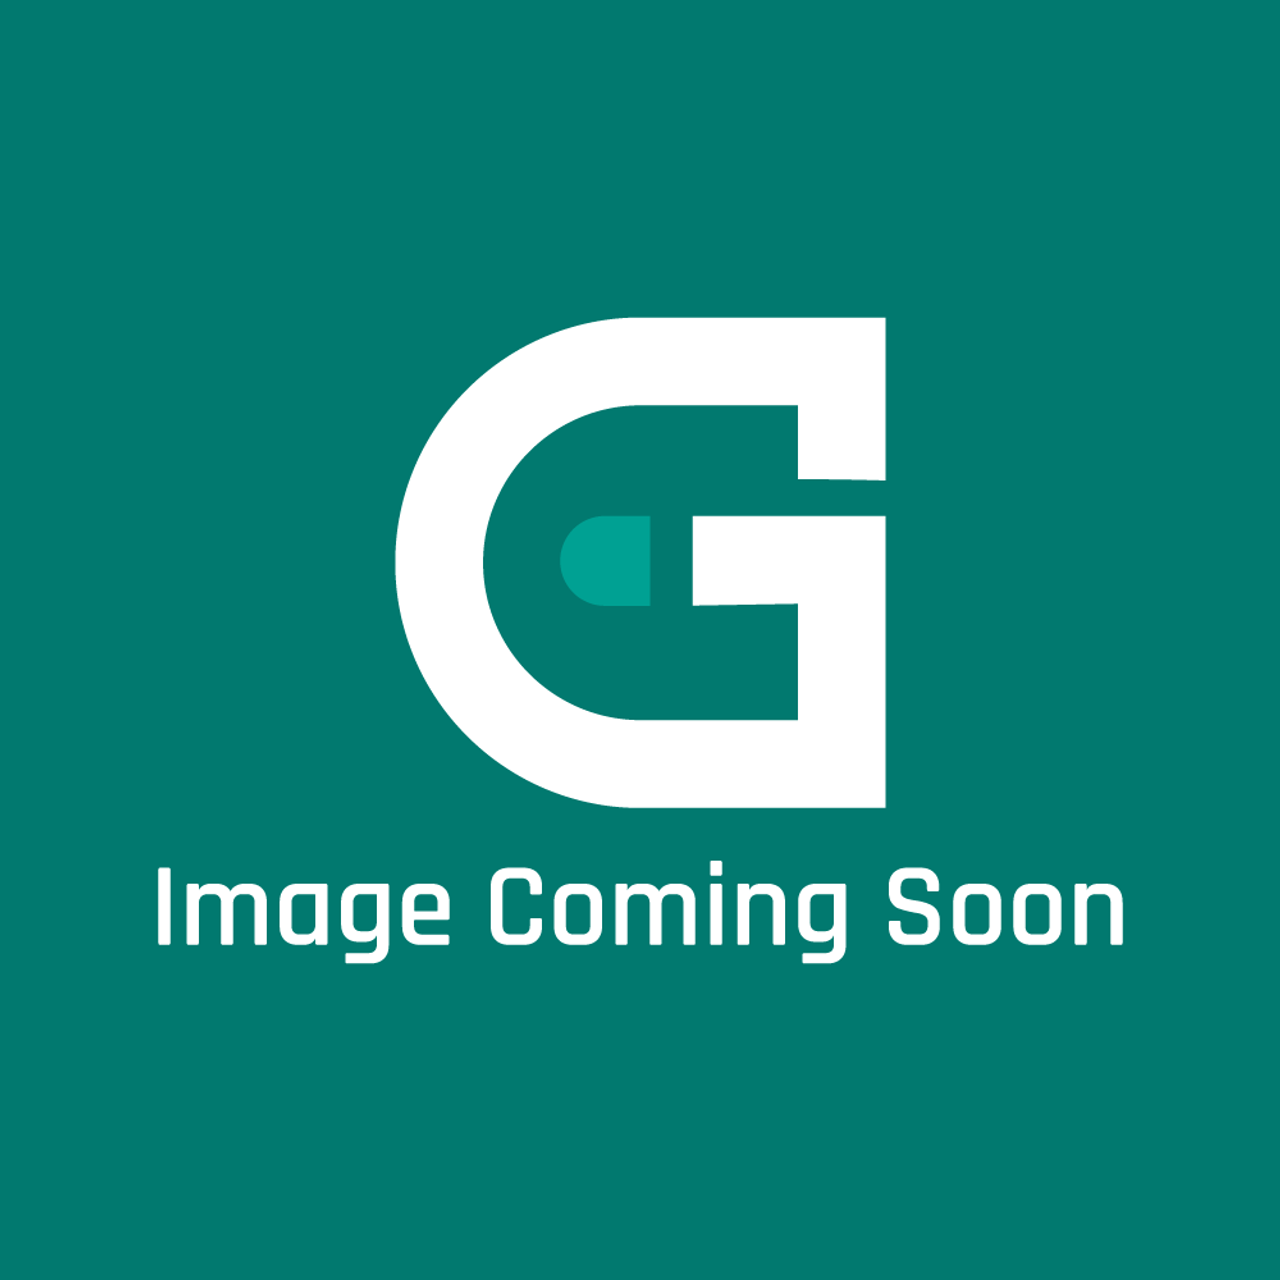 Delfield HZP00043 - Valve Ice Maker - Image Coming Soon!